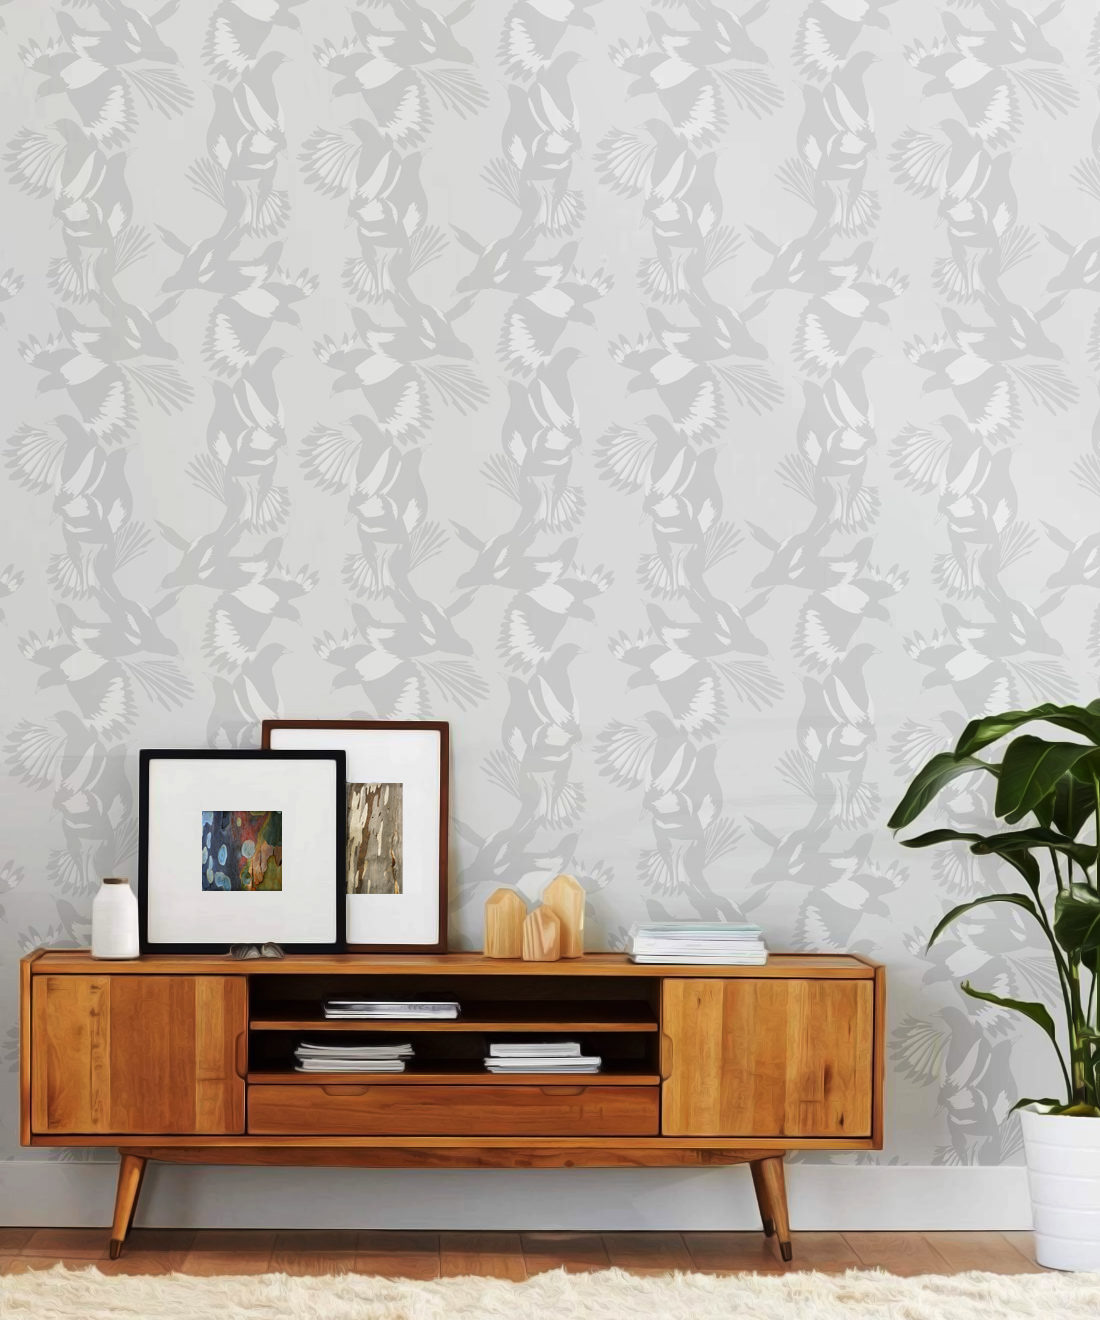 Magpie Wallpaper - Milton & King - Kingdom Home - Papier peint oiseaux - Bondi Insitu gris